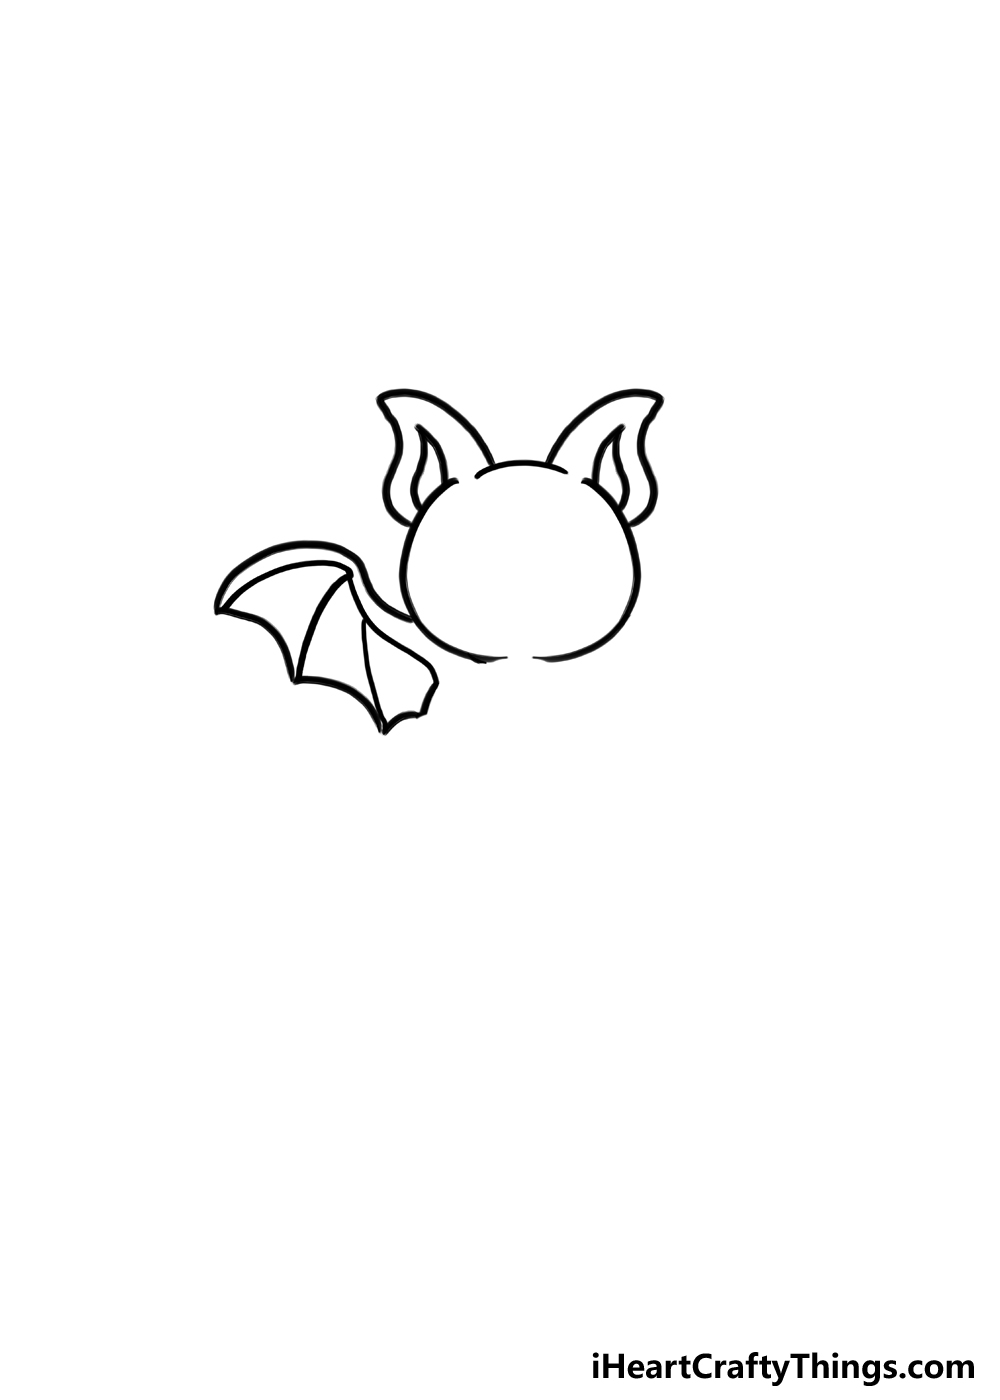 How to Draw A Cute Bat step 3